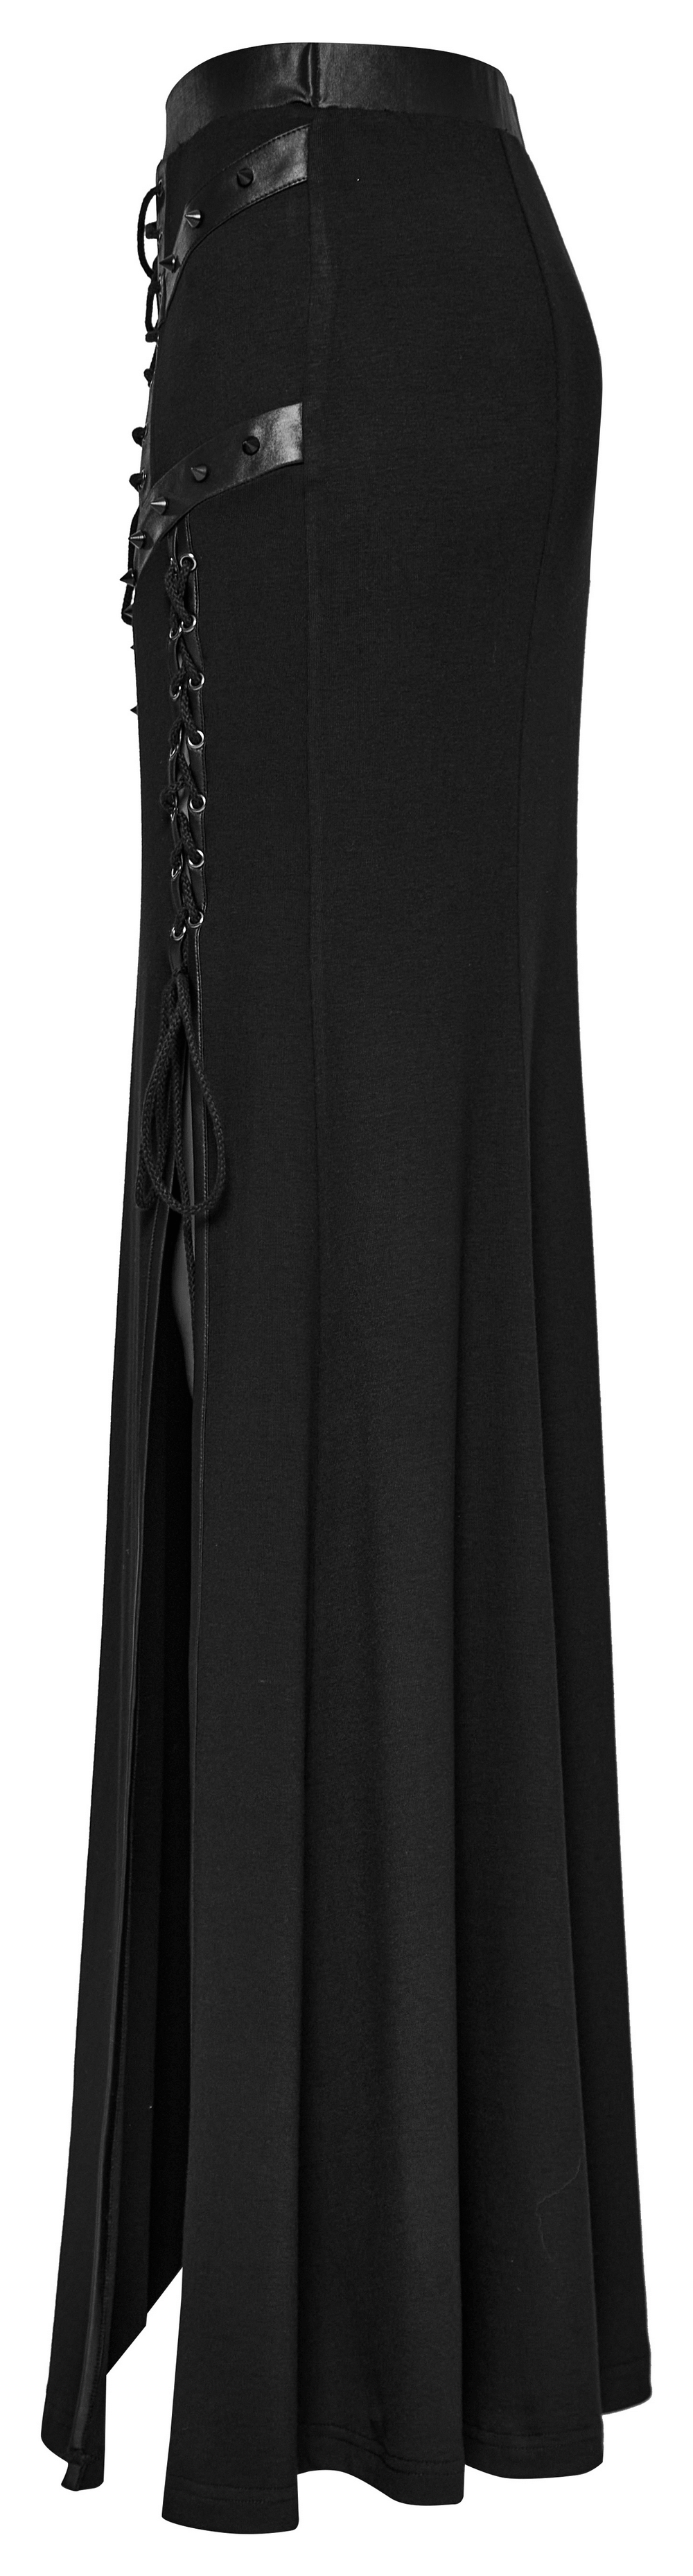 Women's Edgy Mesh Slits Long Skirt With Drawstrings